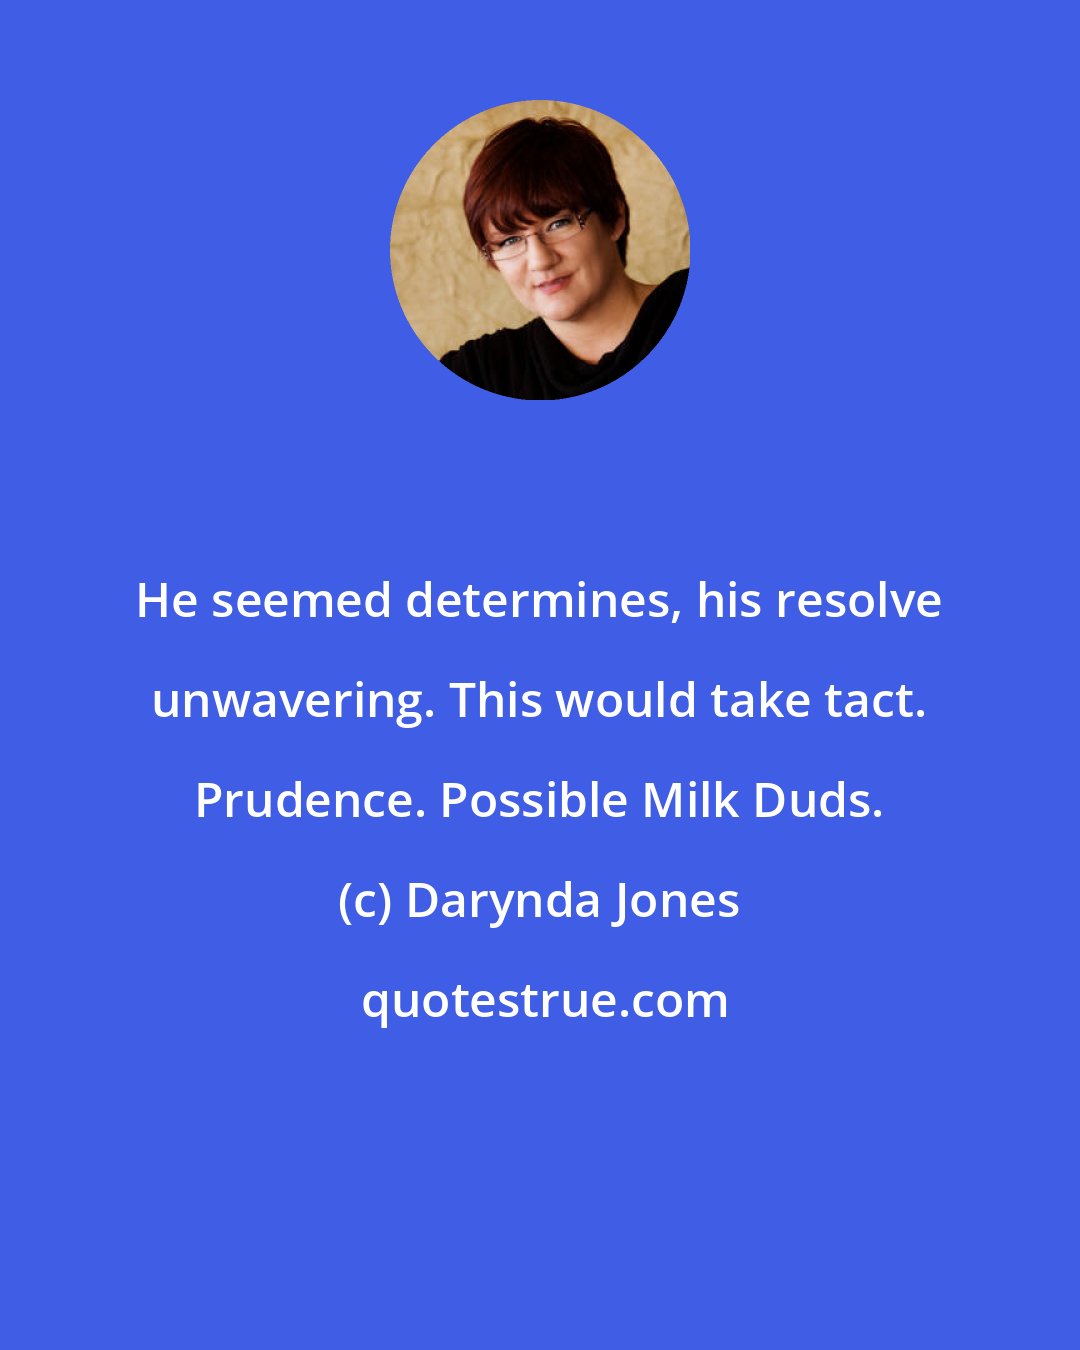 Darynda Jones: He seemed determines, his resolve unwavering. This would take tact. Prudence. Possible Milk Duds.